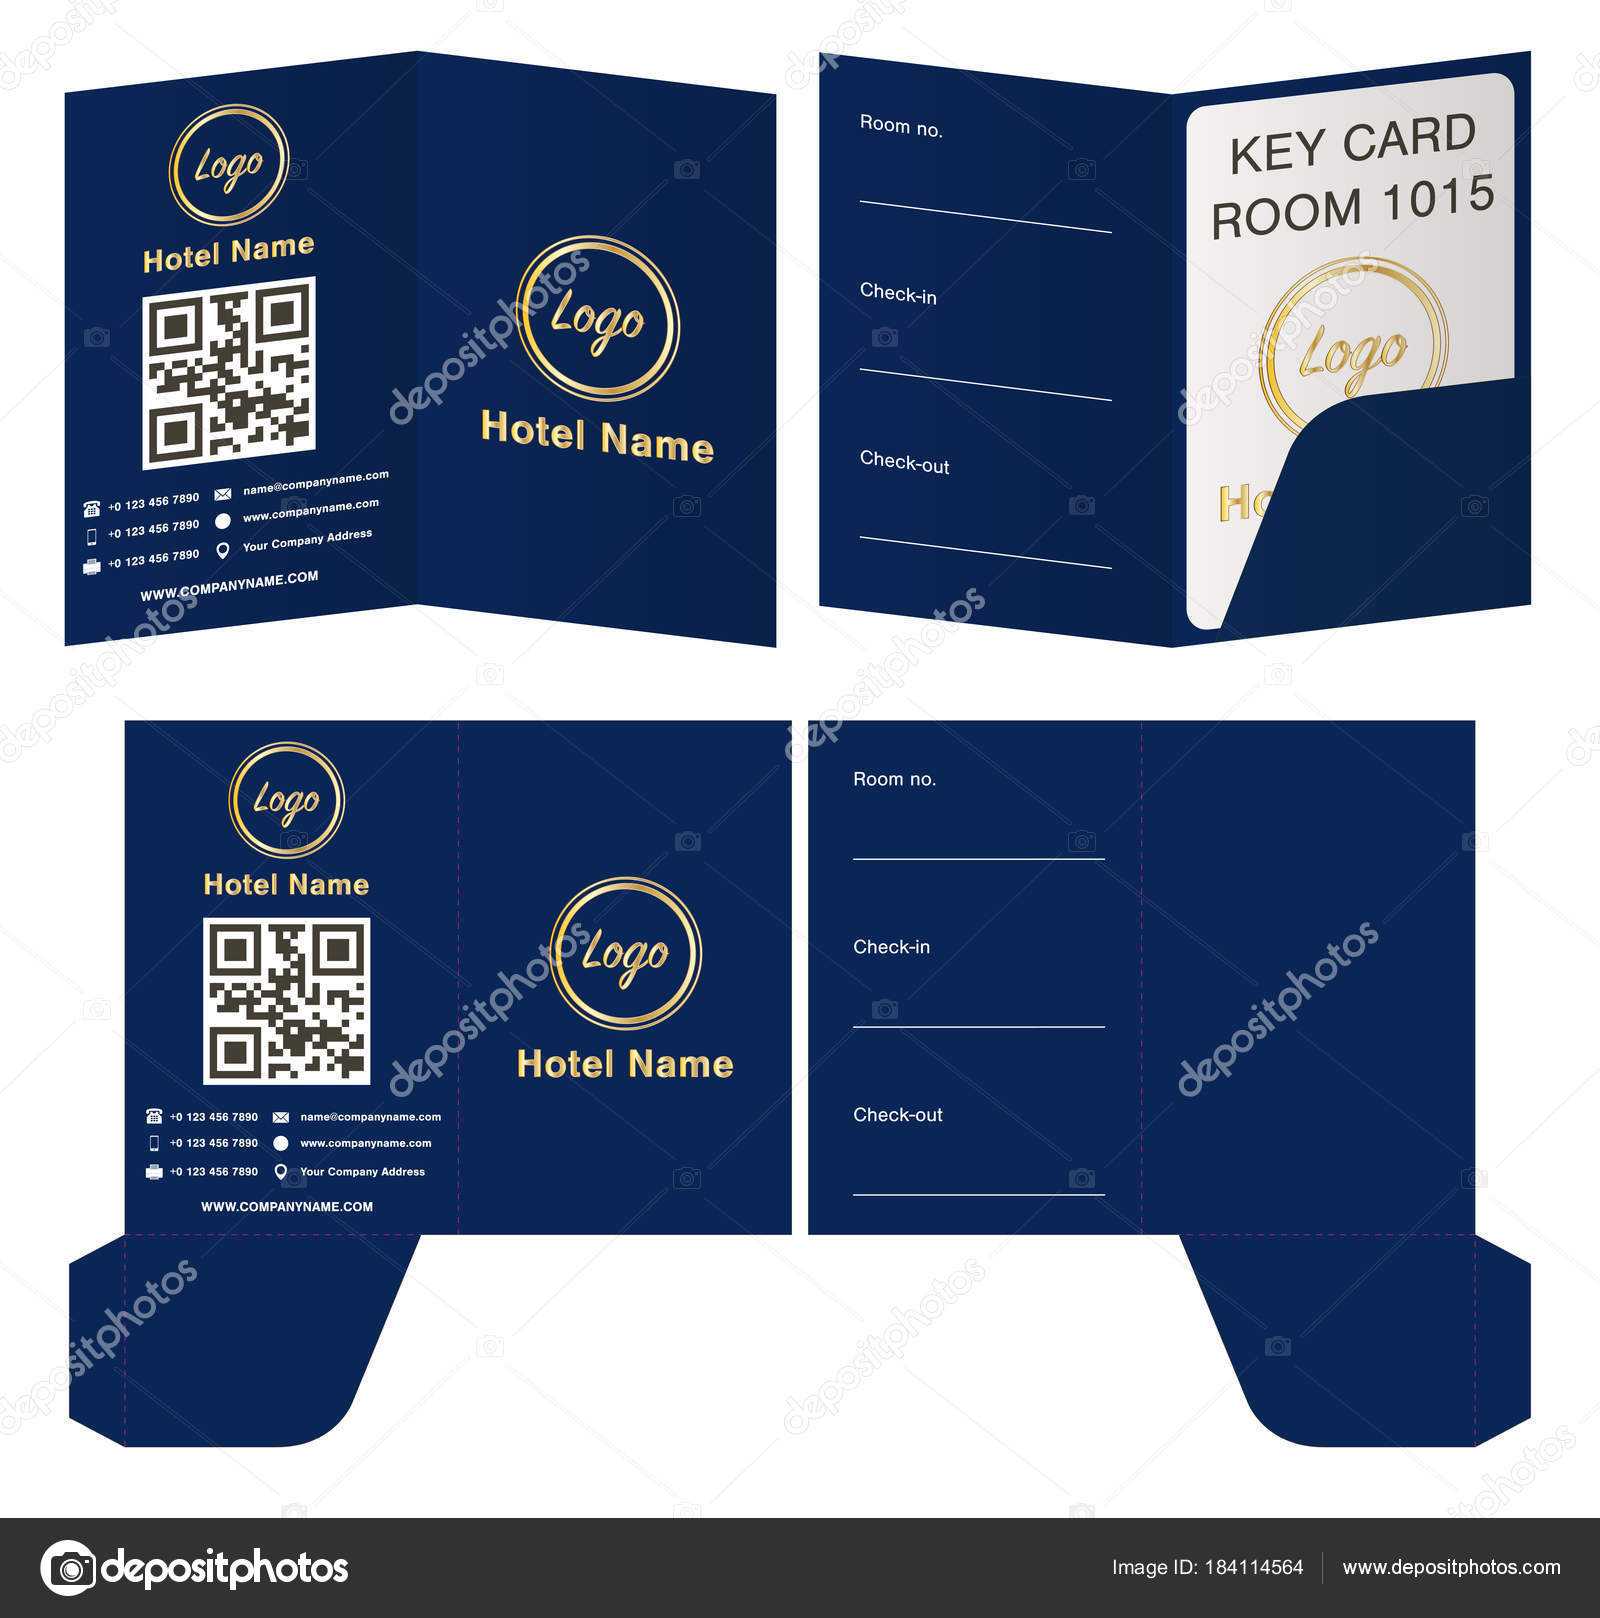 Key Card Holder Template | Hotel Key Card Holder Folder With Regard To Hotel Key Card Template